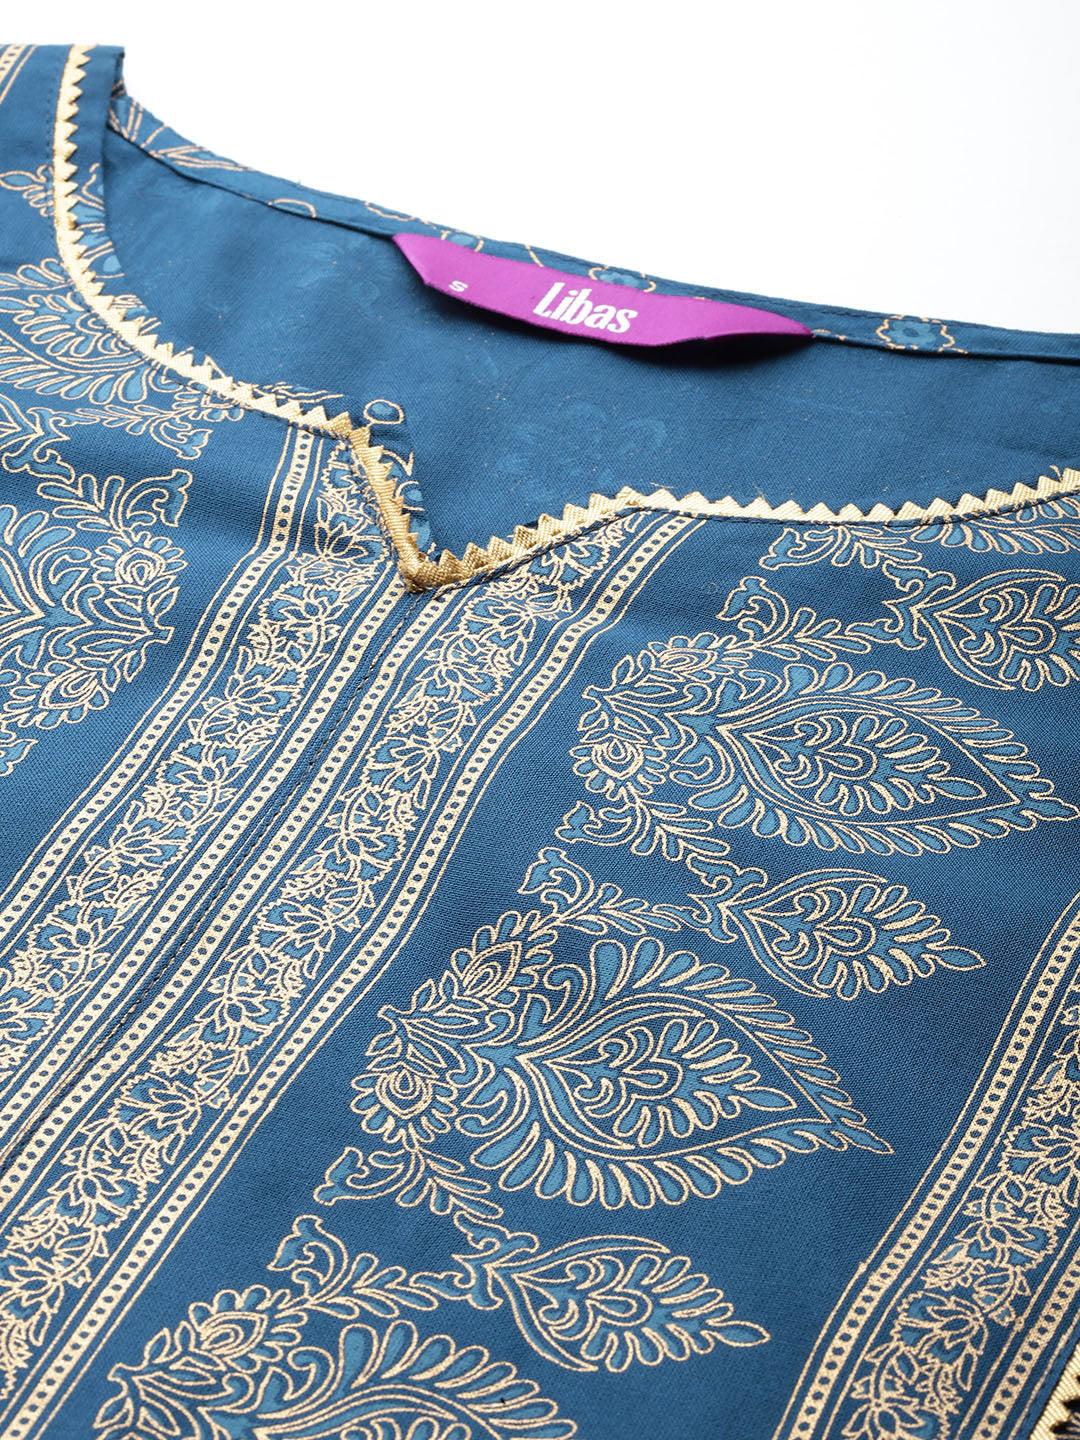 Blue Printed Rayon A-Line Kurta With Trousers & Dupatta